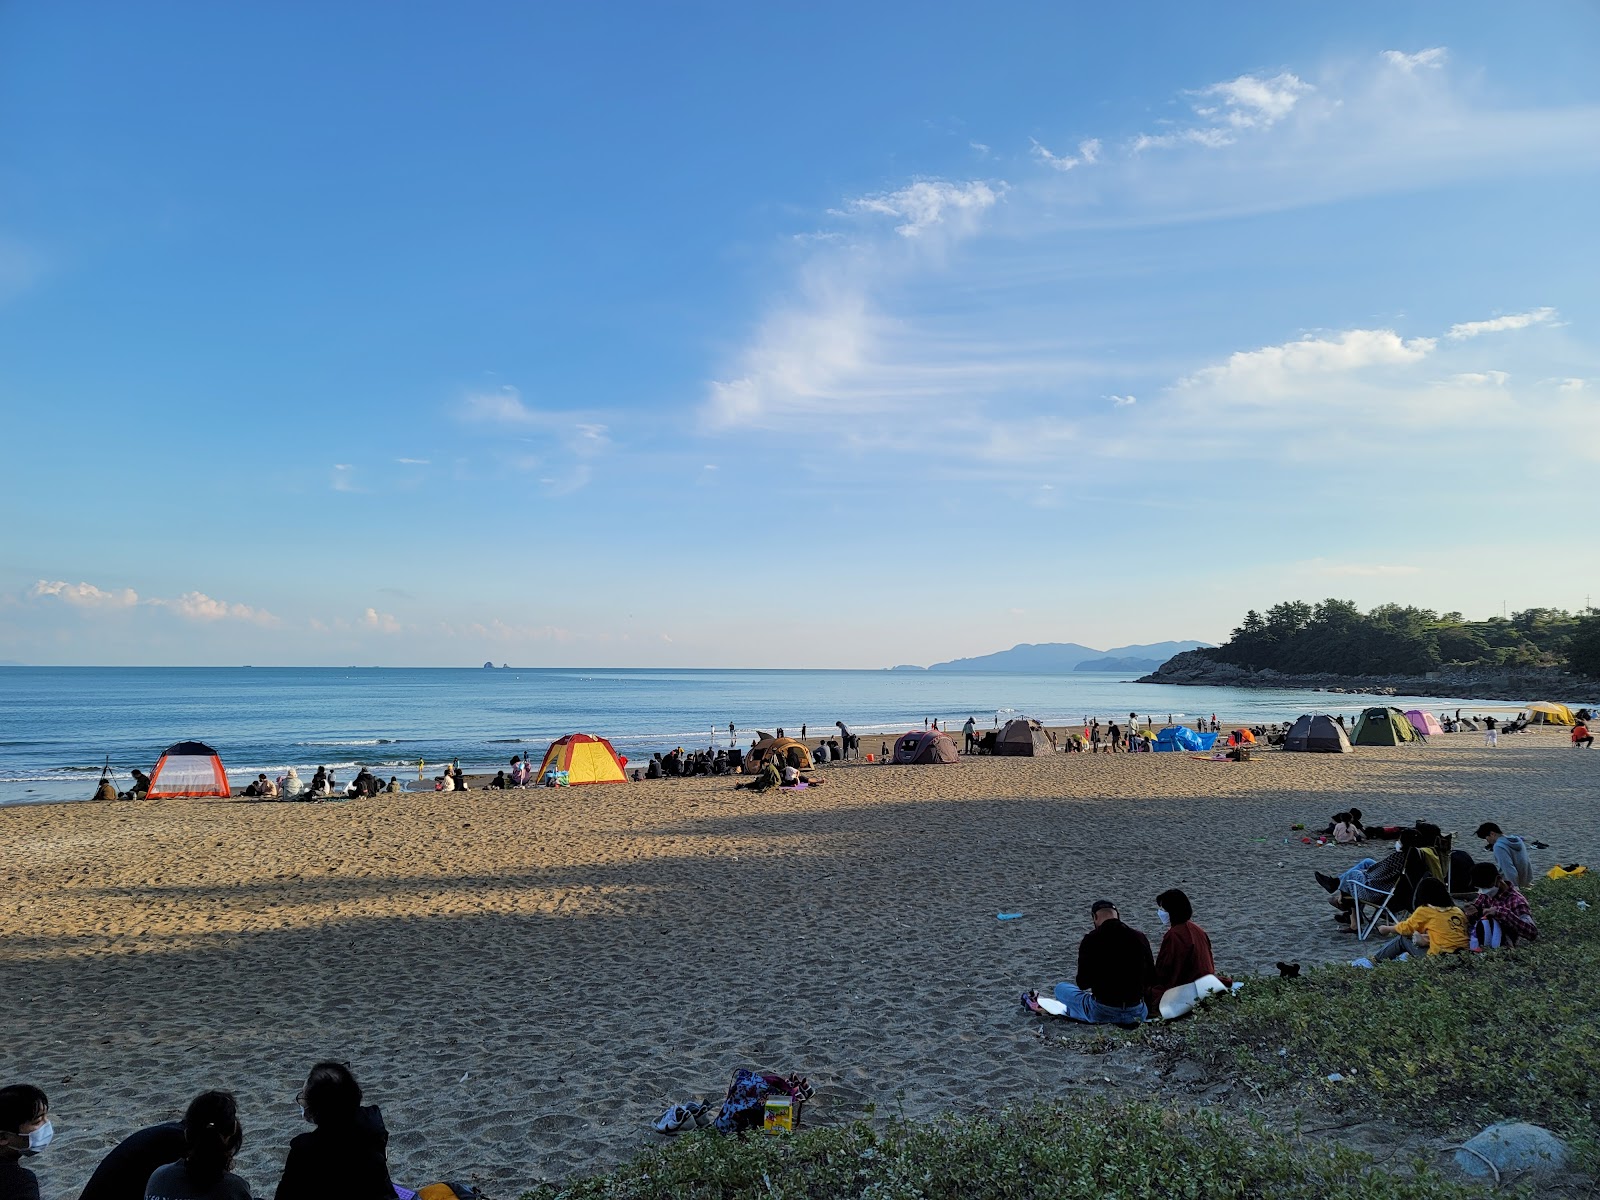 Foto de Namyeol Sunrise Beach - lugar popular entre os apreciadores de relaxamento